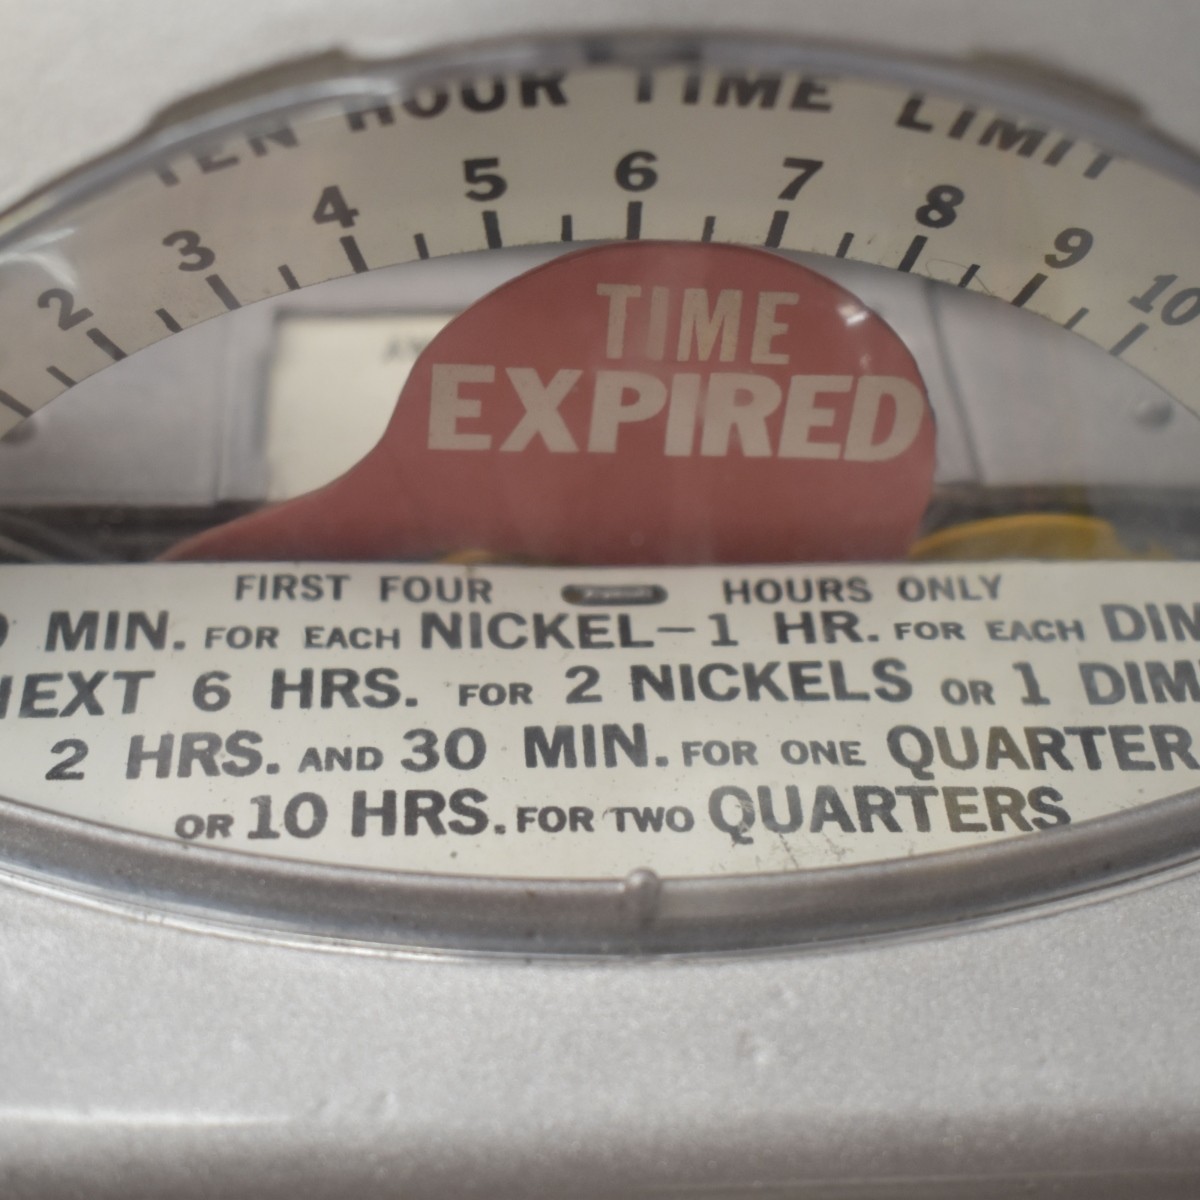 Vintage Duncan Parking Meter